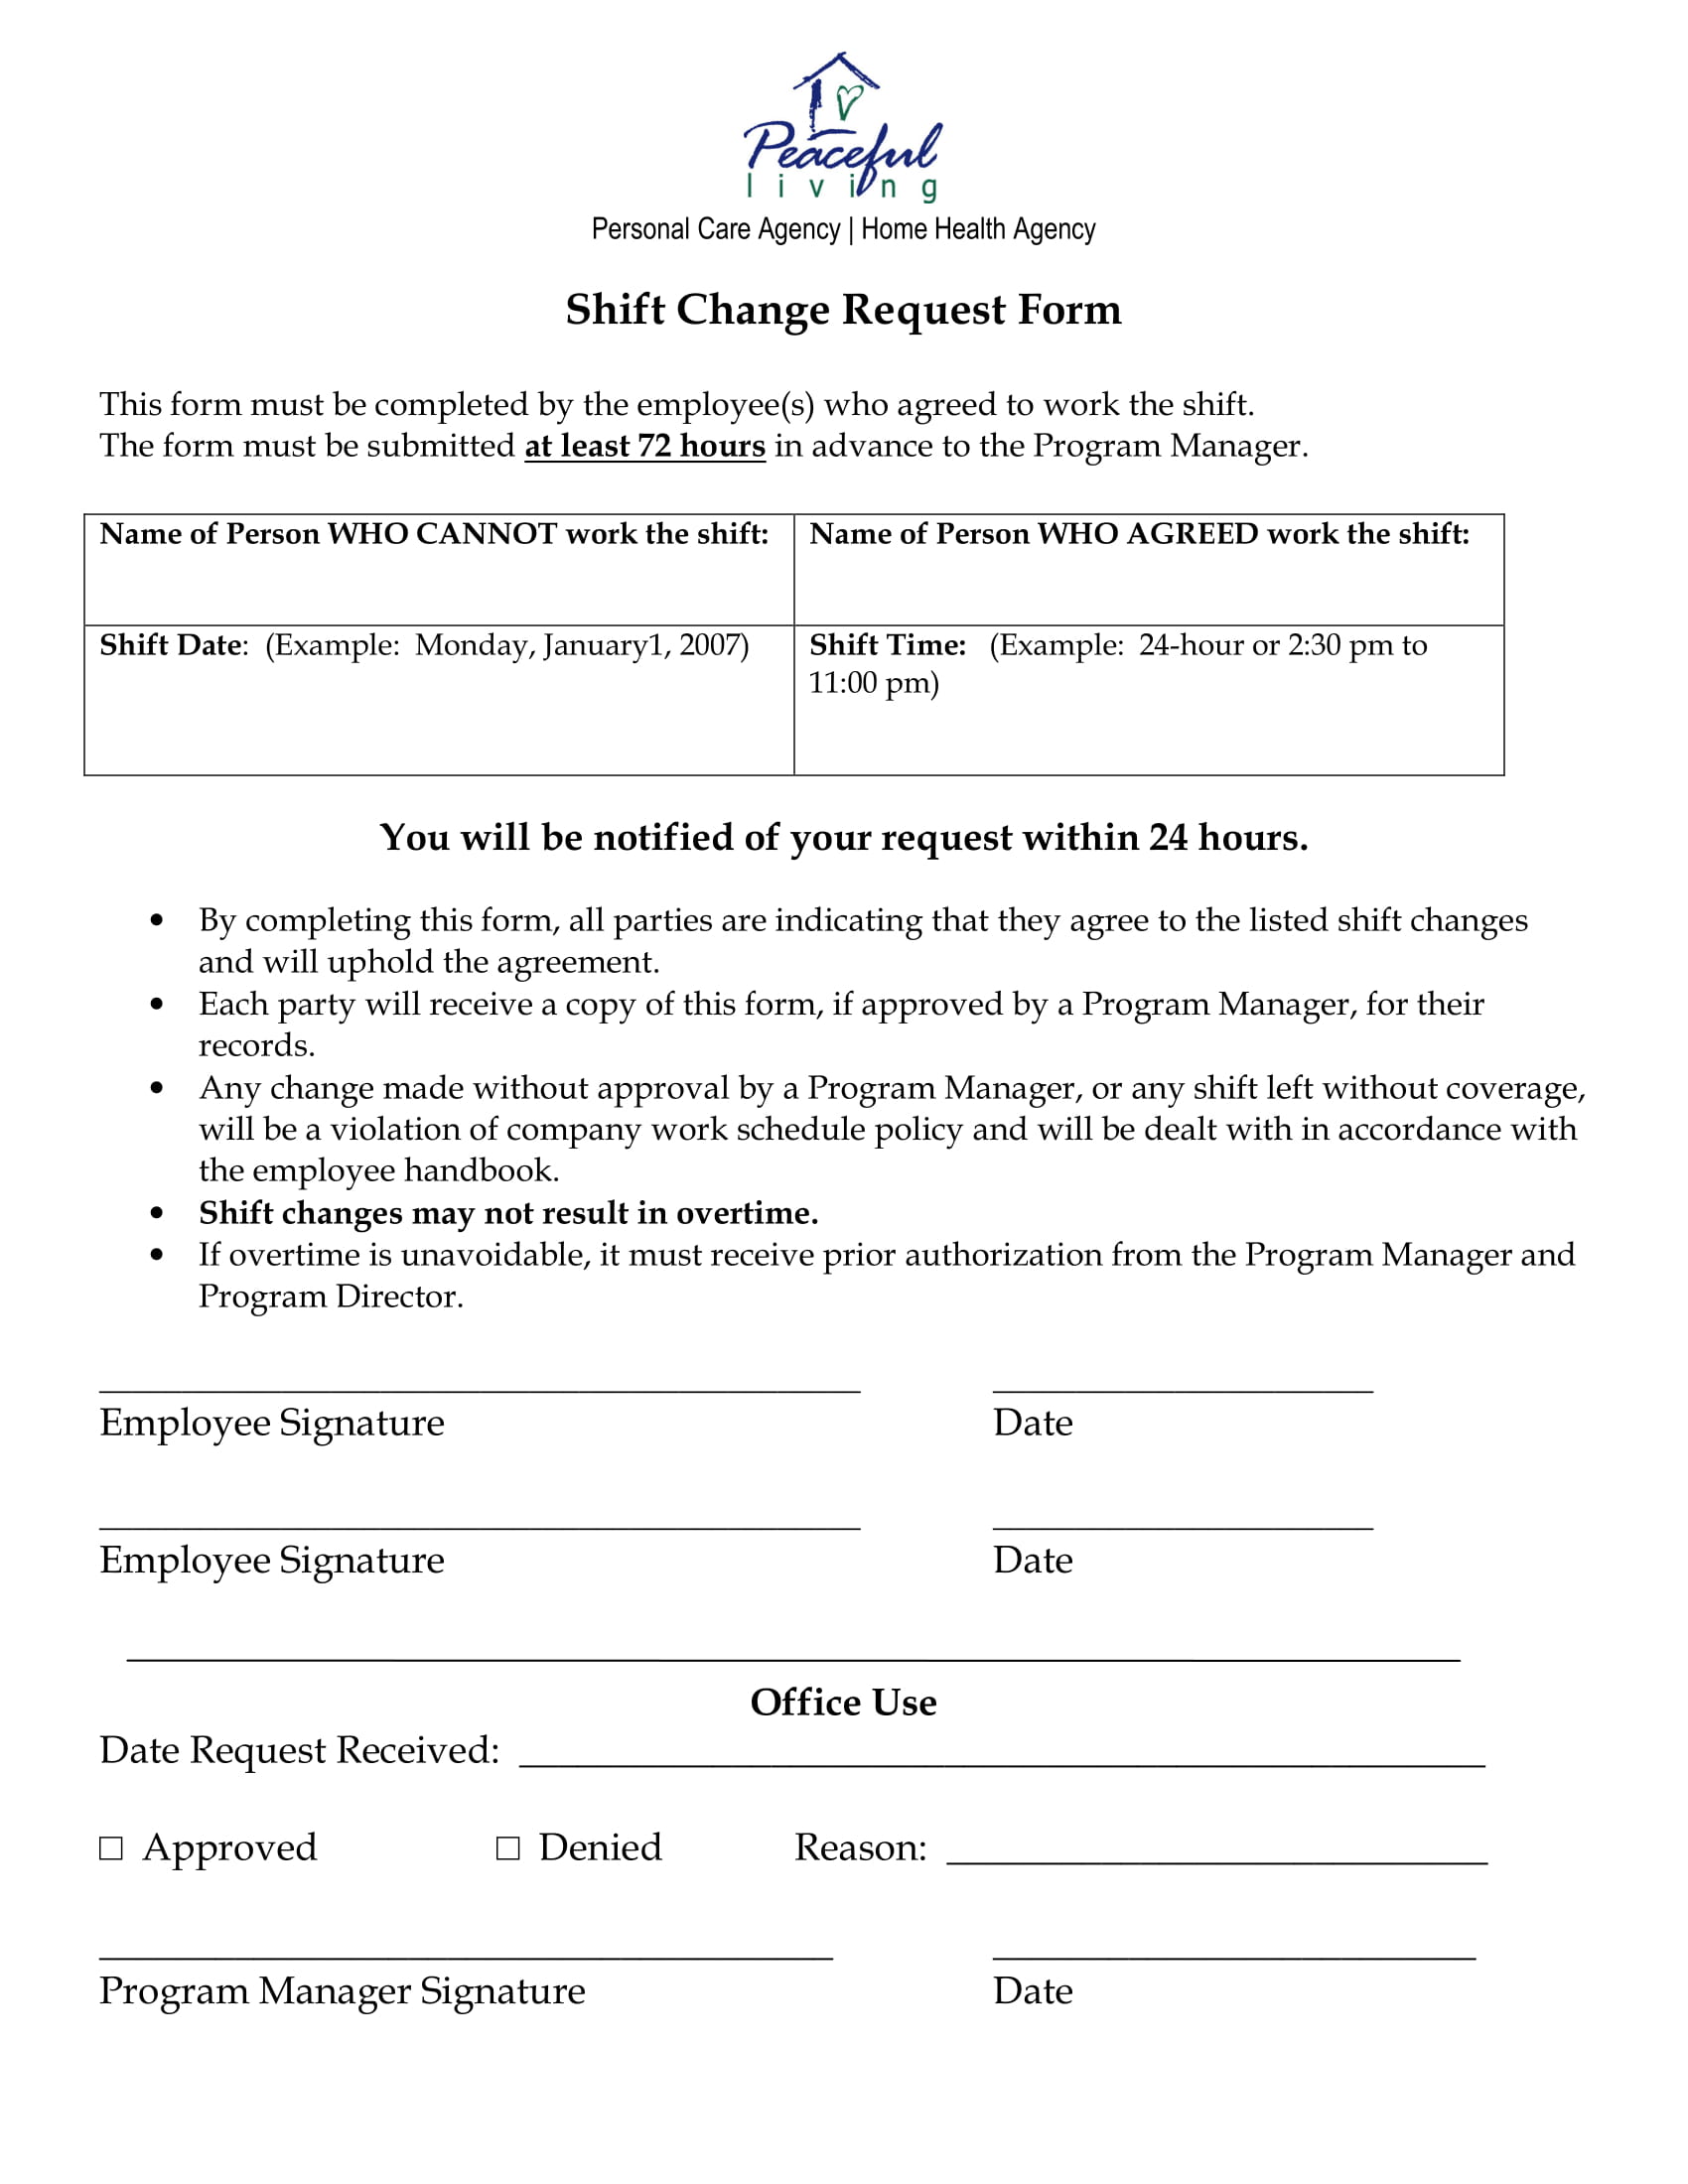 shift change request form sample 1